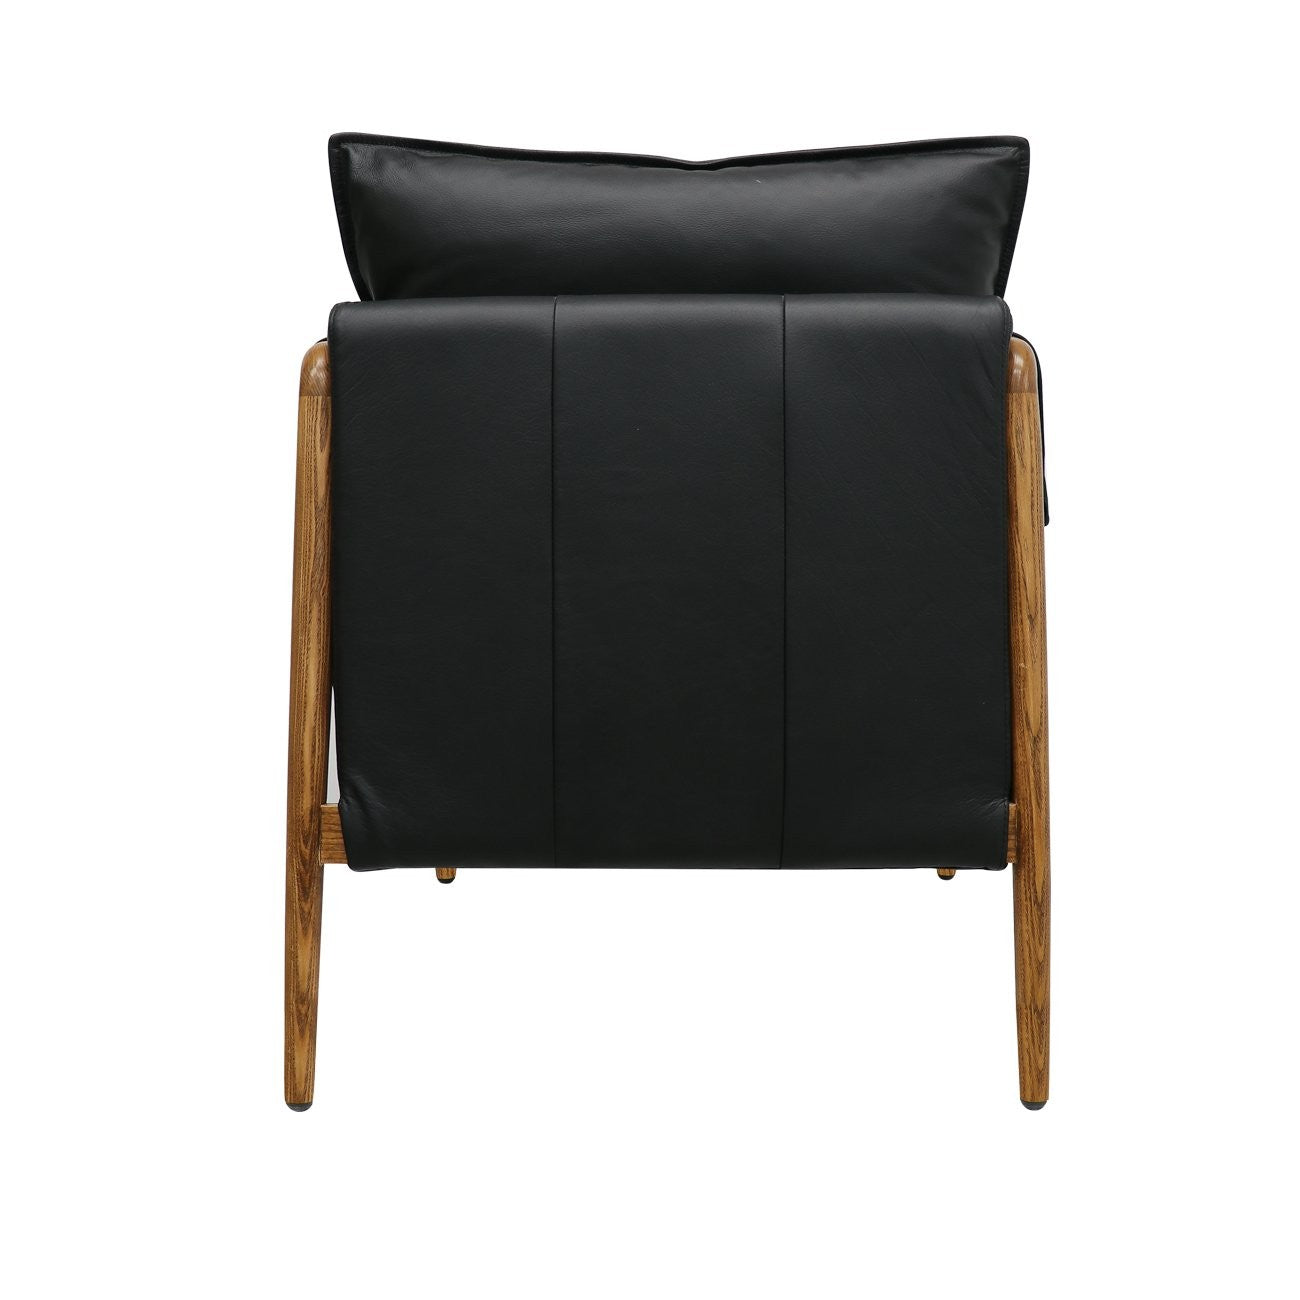 Conan Leather Armchair - Black